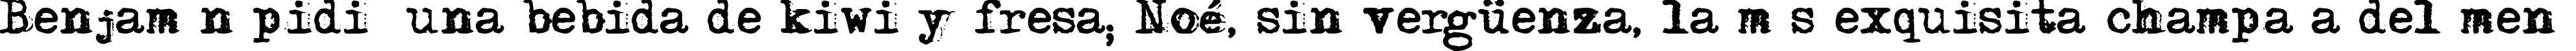 Пример написания шрифтом Adler текста на испанском